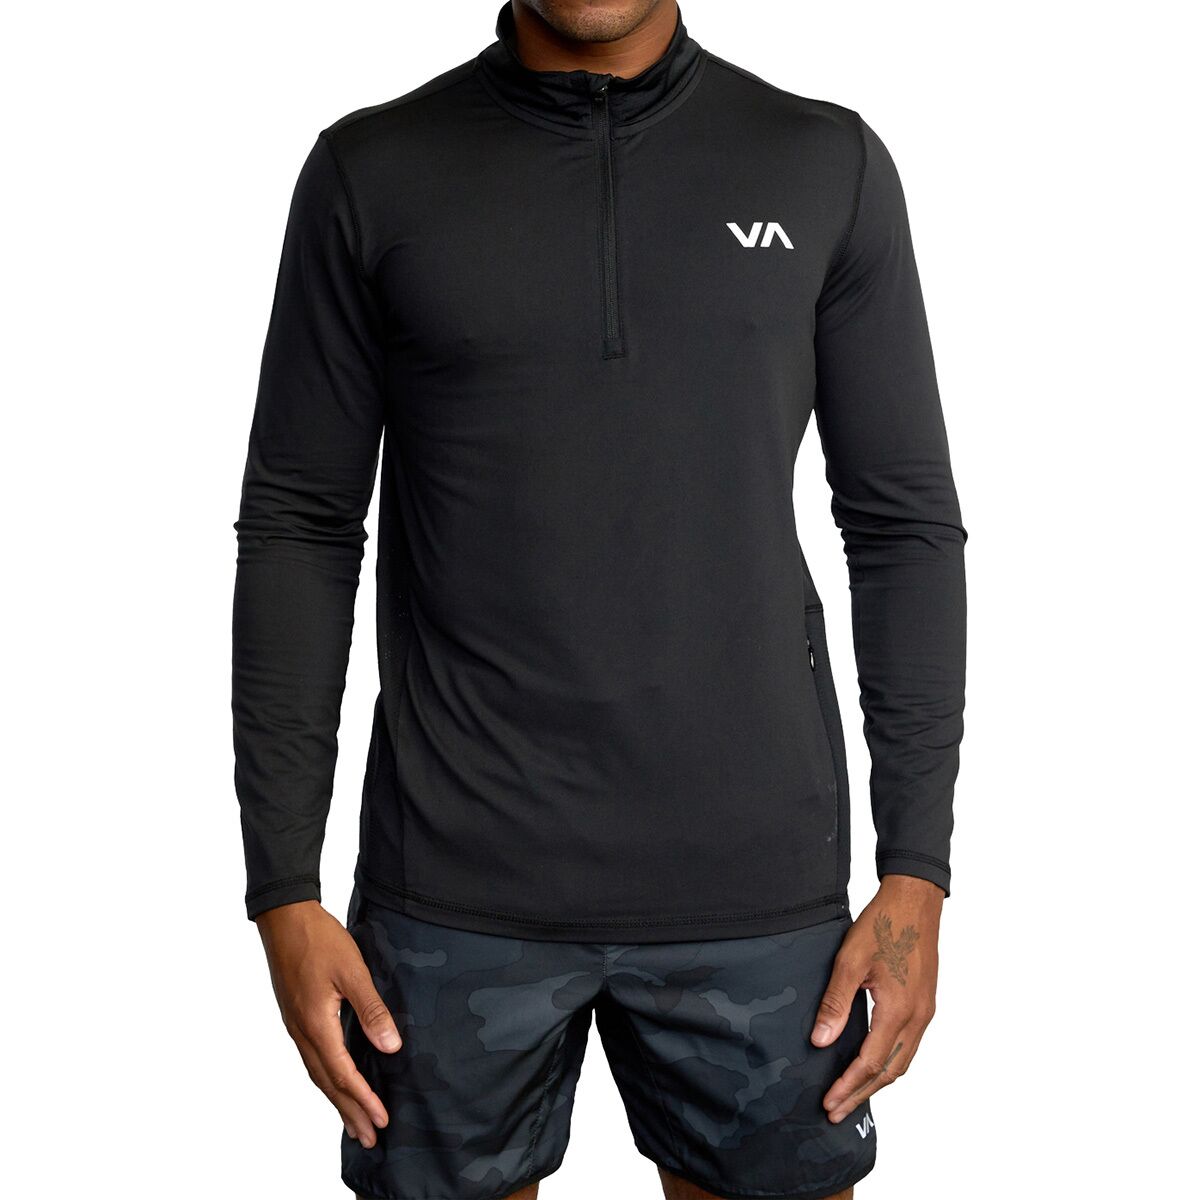 RVCA Sport Vent Half-Zip Long-Sleeve Shirt - Men's